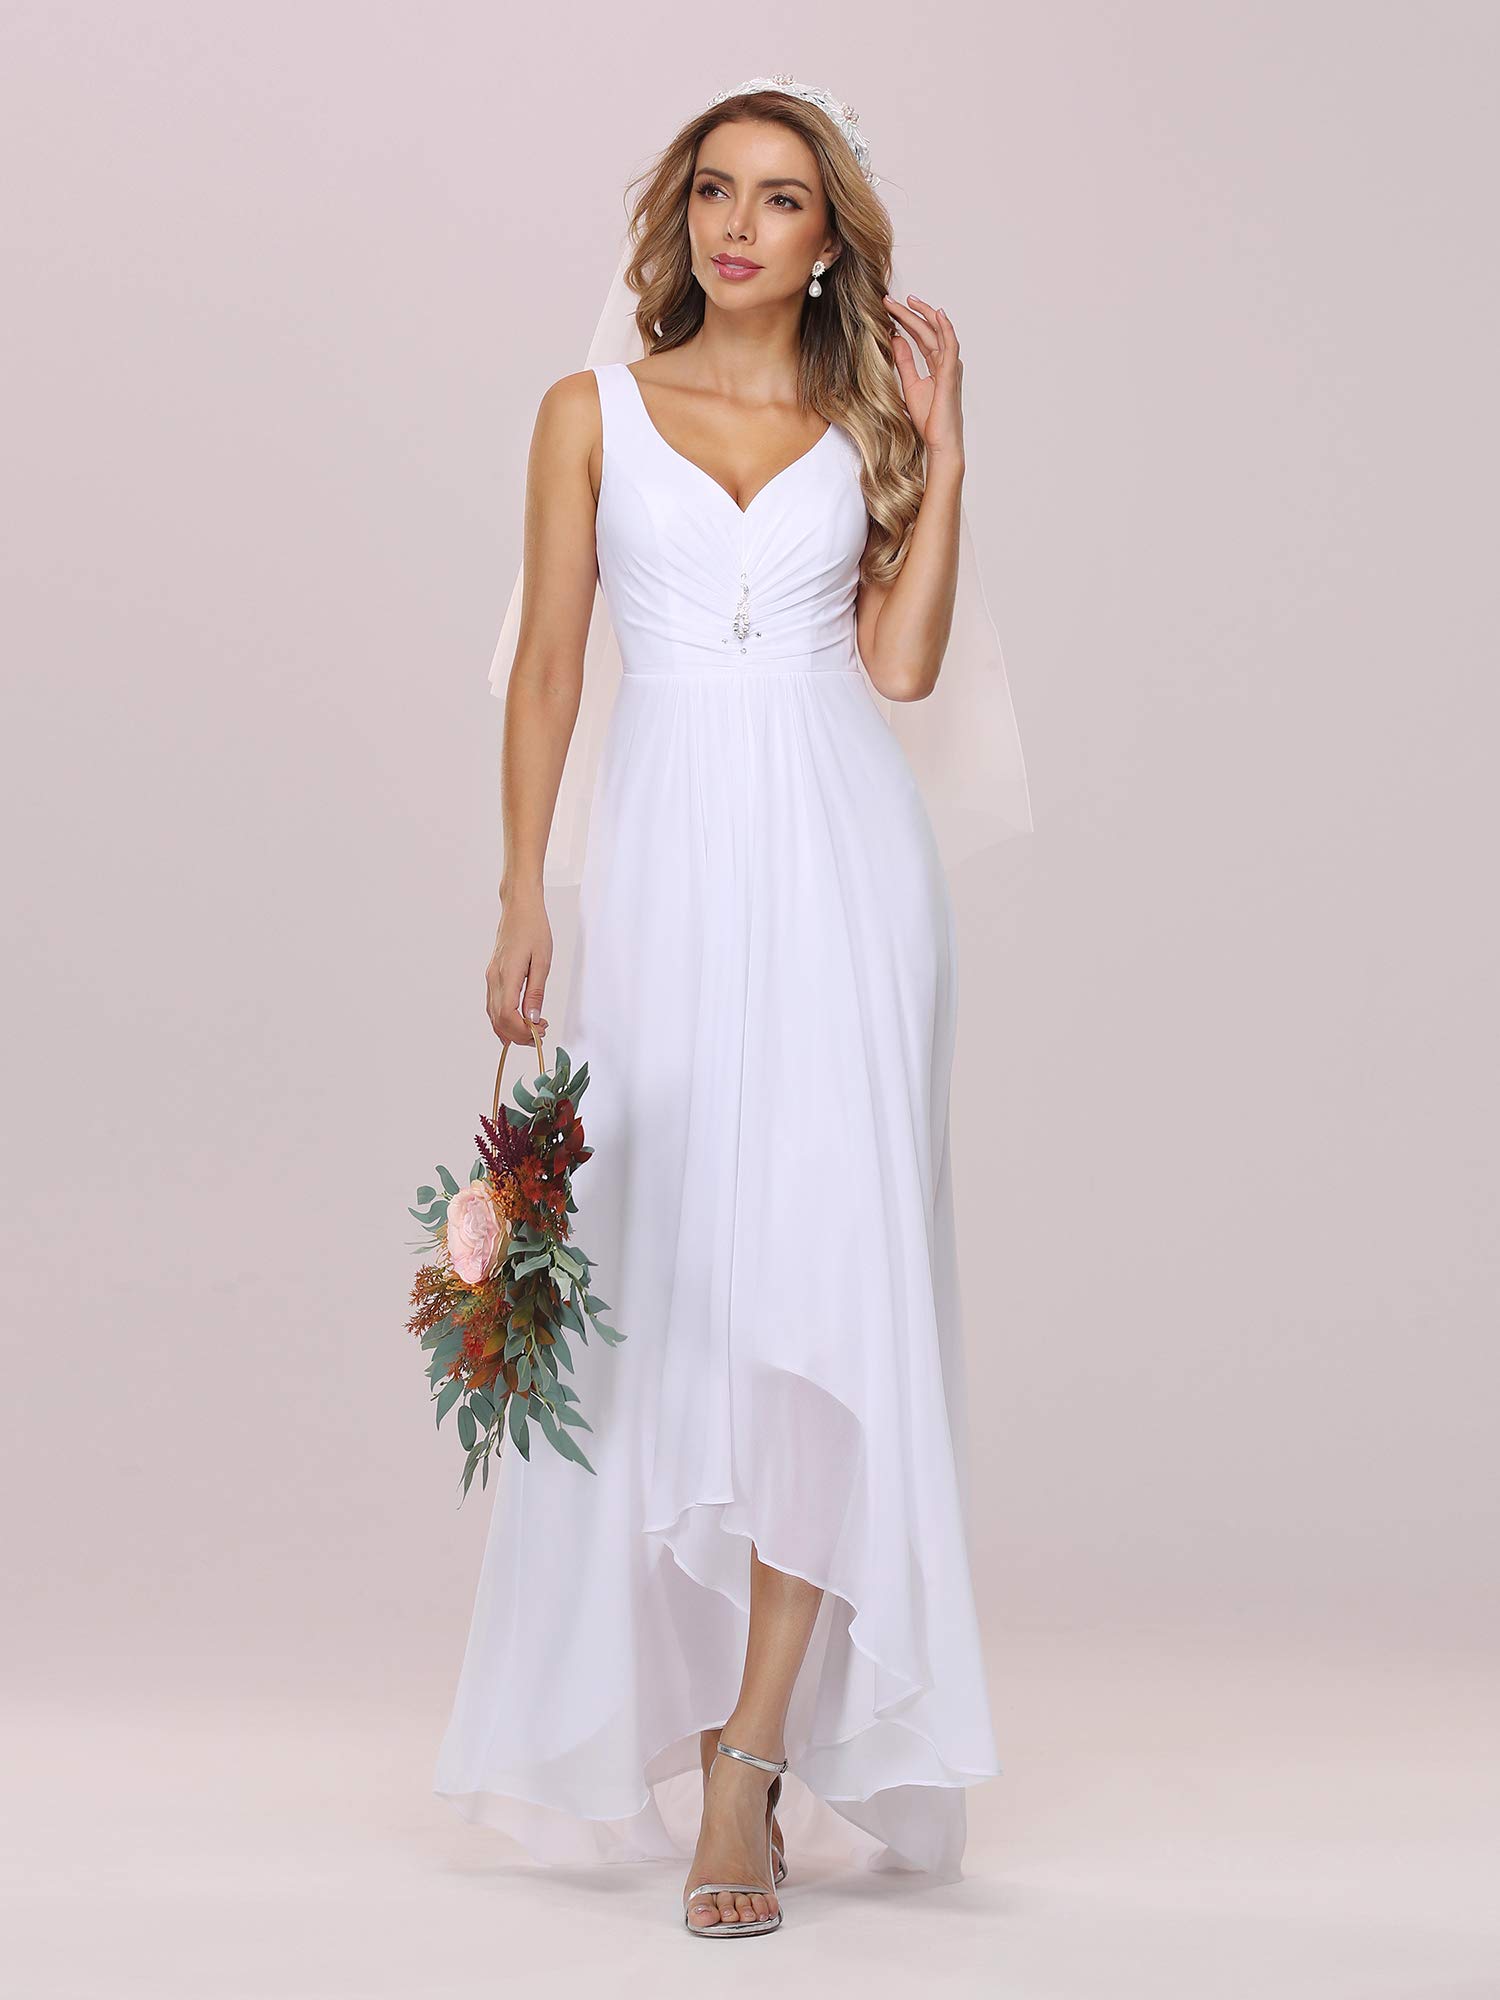 Ever-Pretty Women's High-Low Hemline Simple Chiffon Wedding Dress 9983-EH